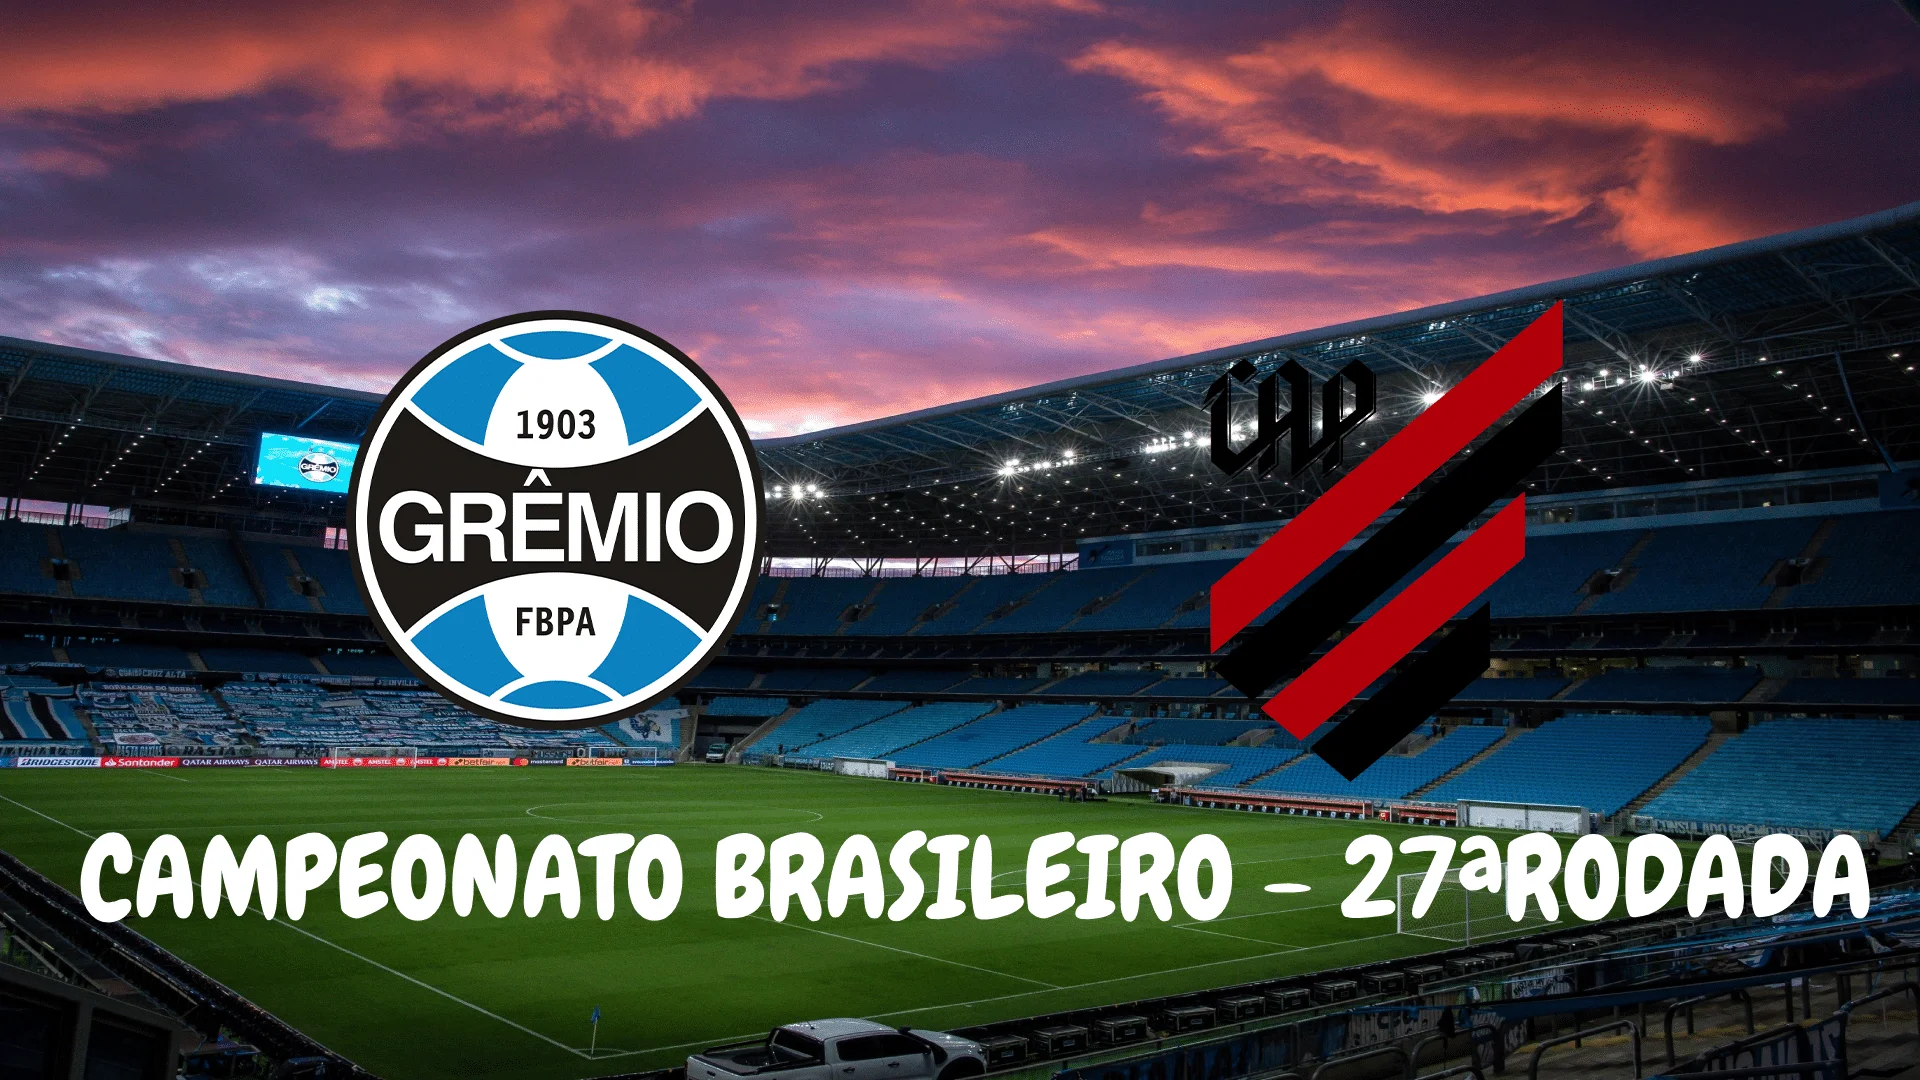 Grêmio vs Caxias: A Classic Rivalry on the Football Pitch